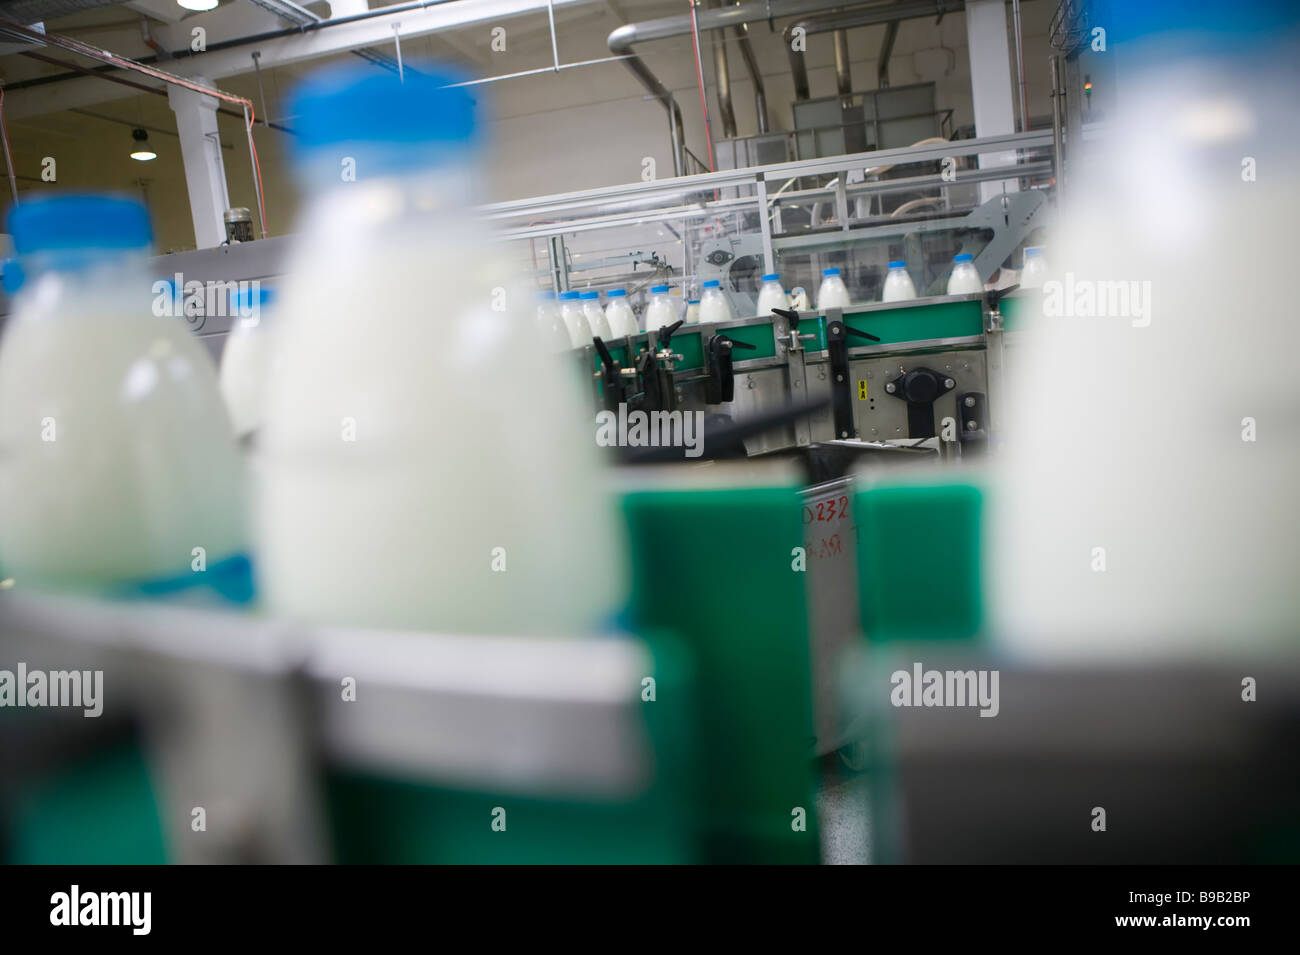 Dairy Plant Conveyor with milk bottles Stock Photo